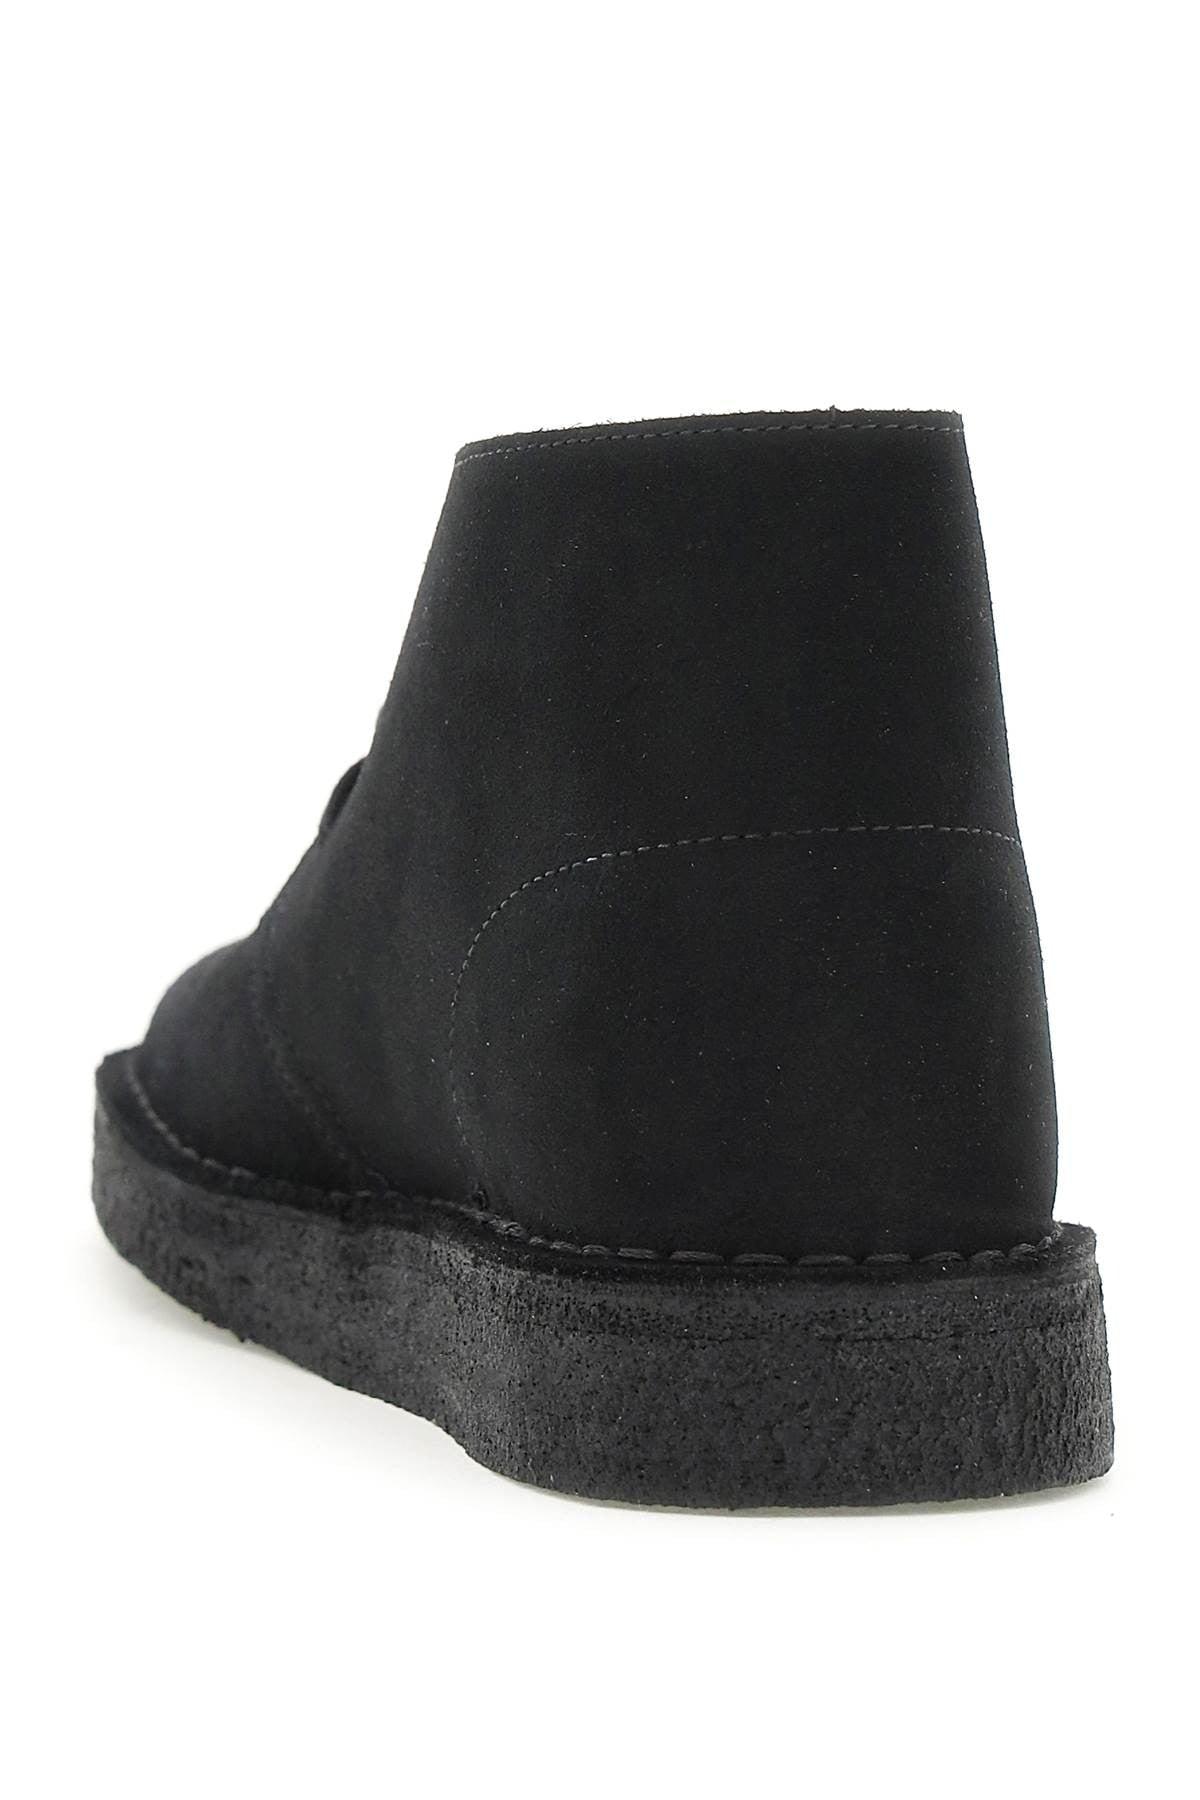 Clarks Originals Desert Coal Lace-up Shoes in Black for Men | Lyst